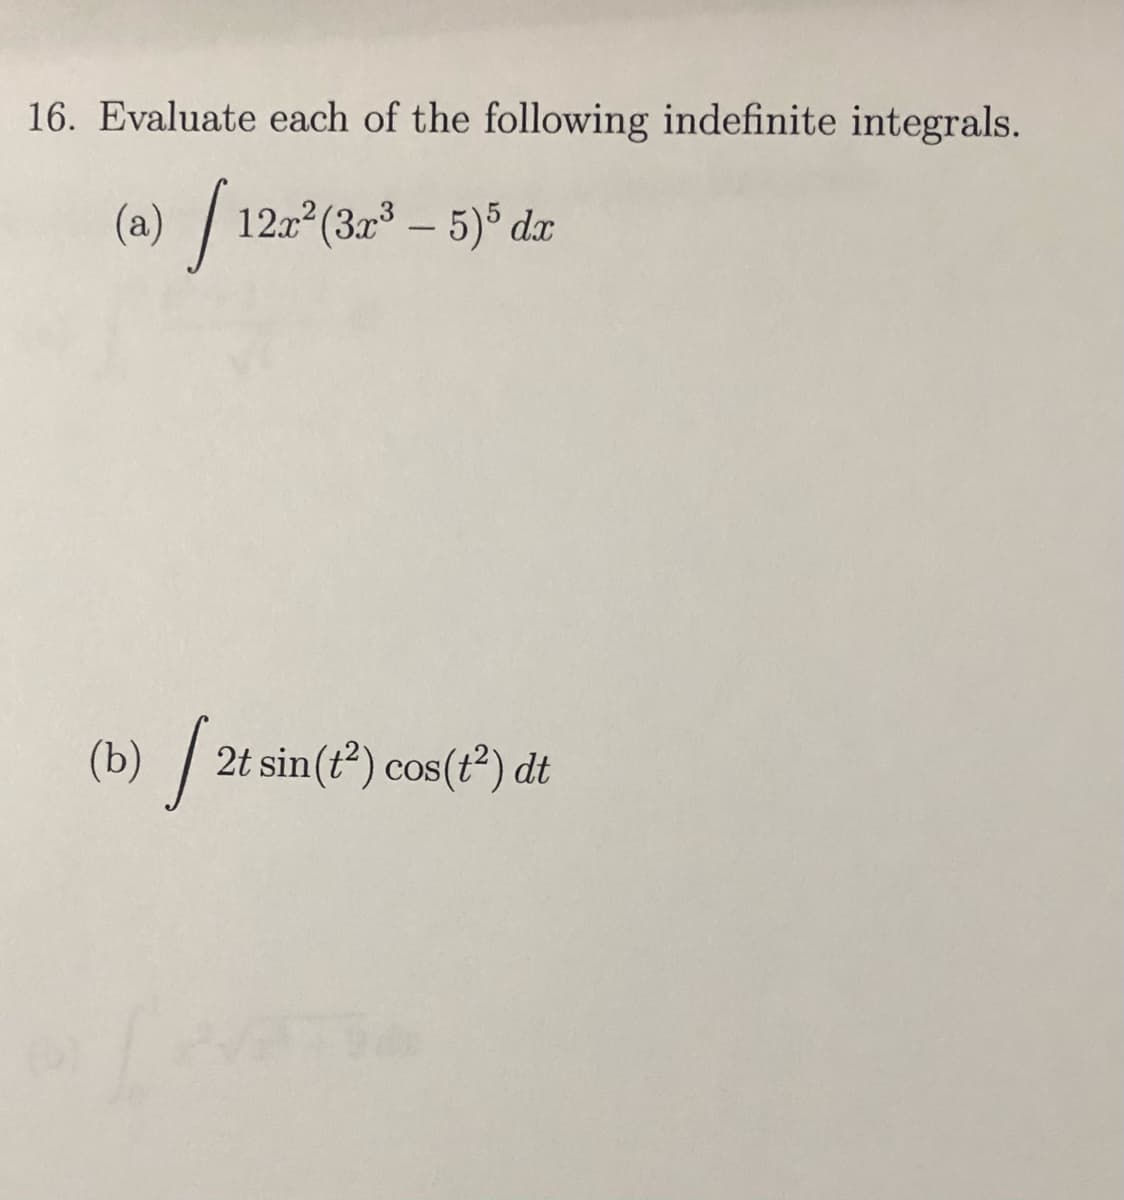 16. Evaluate each of the following indefinite integrals.
(a) / 12 (3.r* – 5)° da
-
(b) / 2t sin(²) cos(tº) dt
